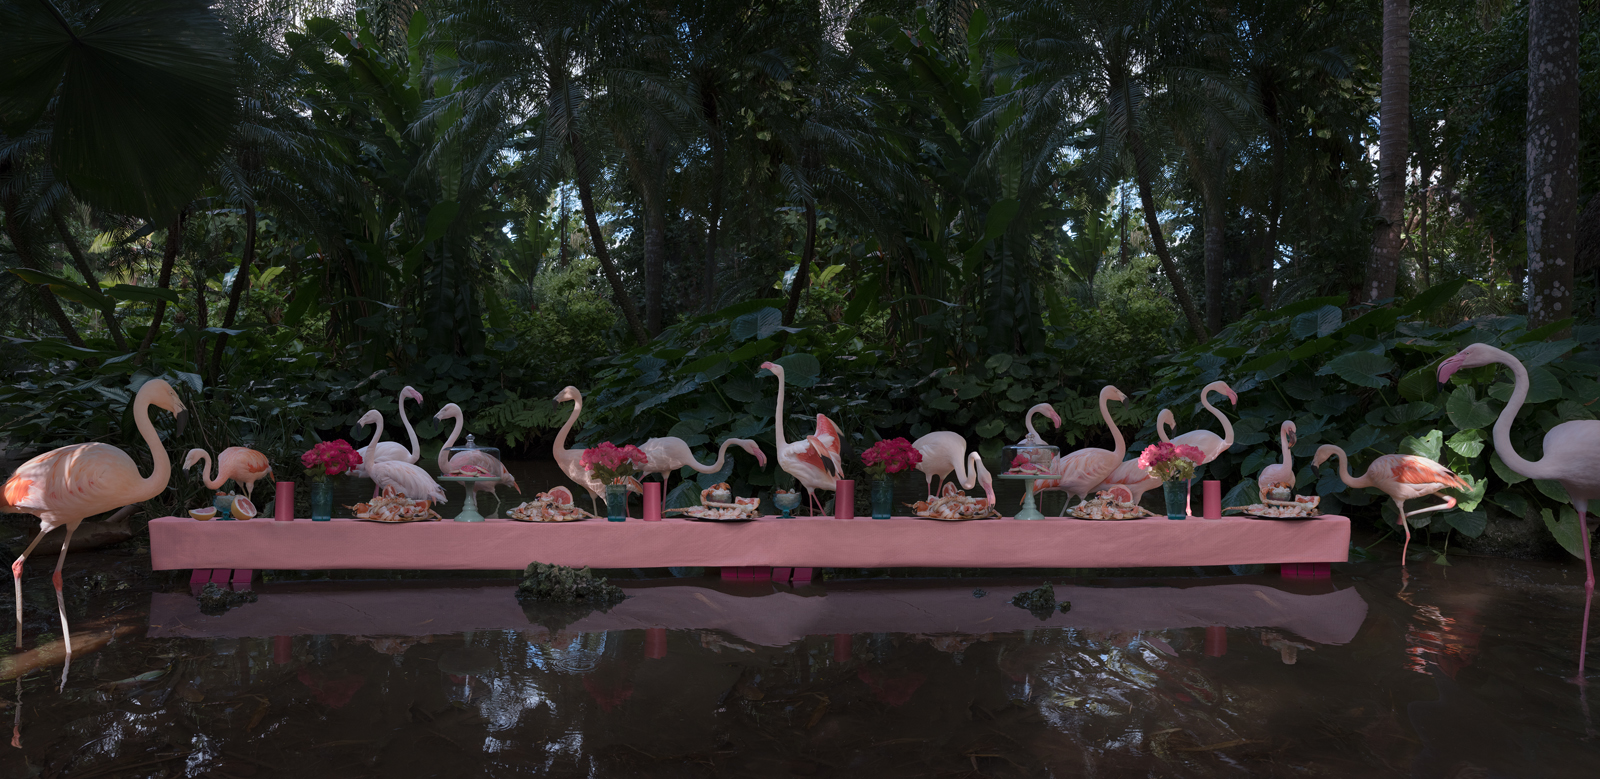  The Flamingo Feast  United States, 2017  10”x20.5” | 20”x41” | 40”x82” 